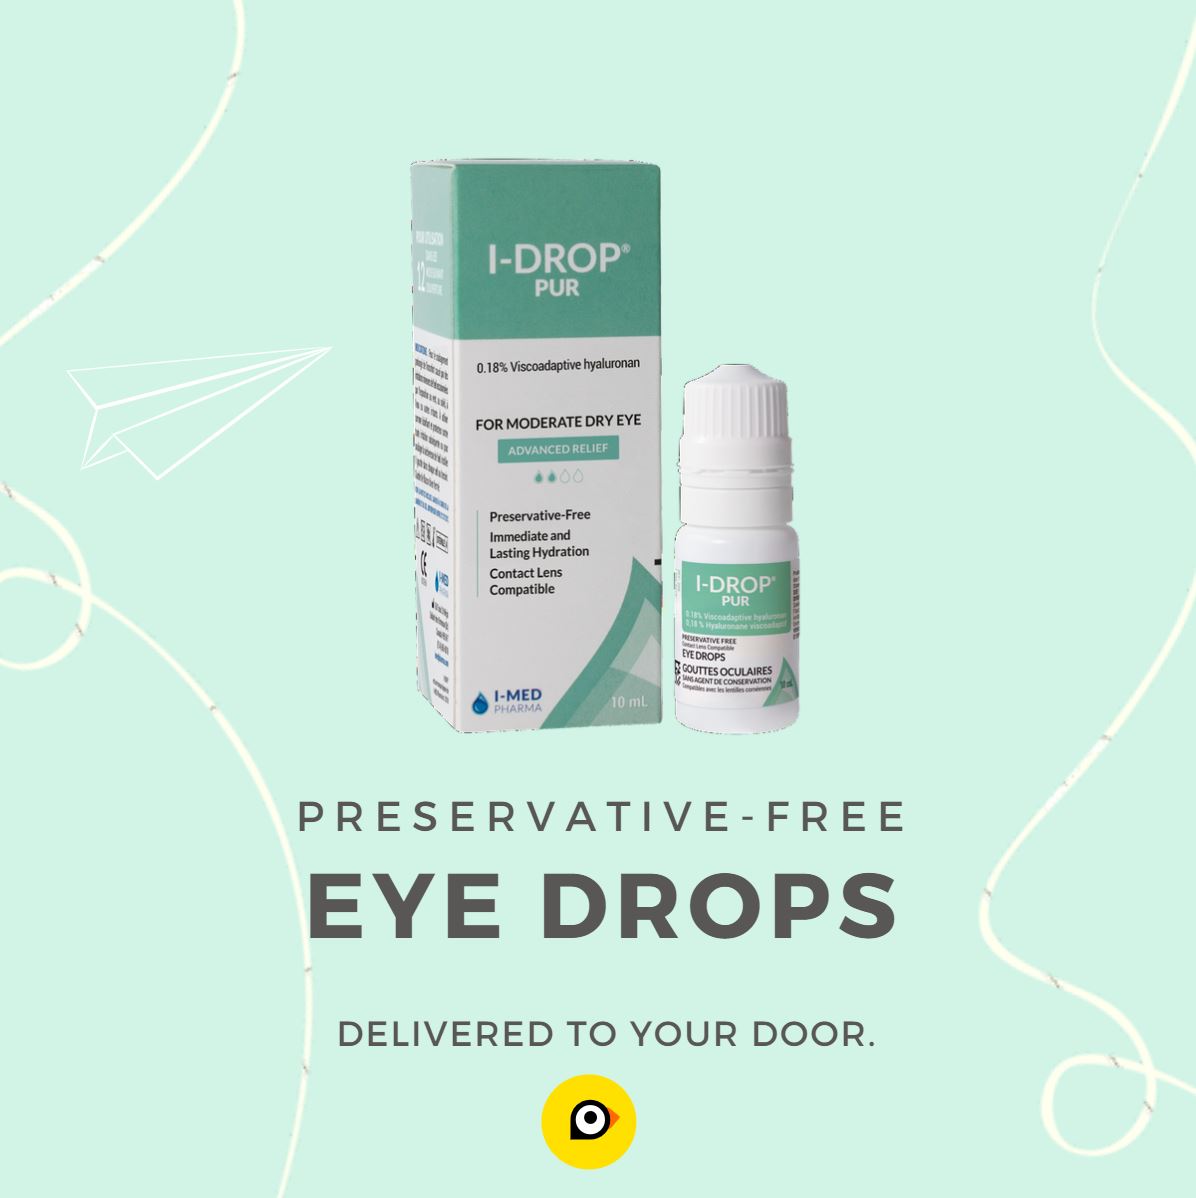 I-Drop Pur Gel | #1 Optometrist Proven Dry Eye Gel